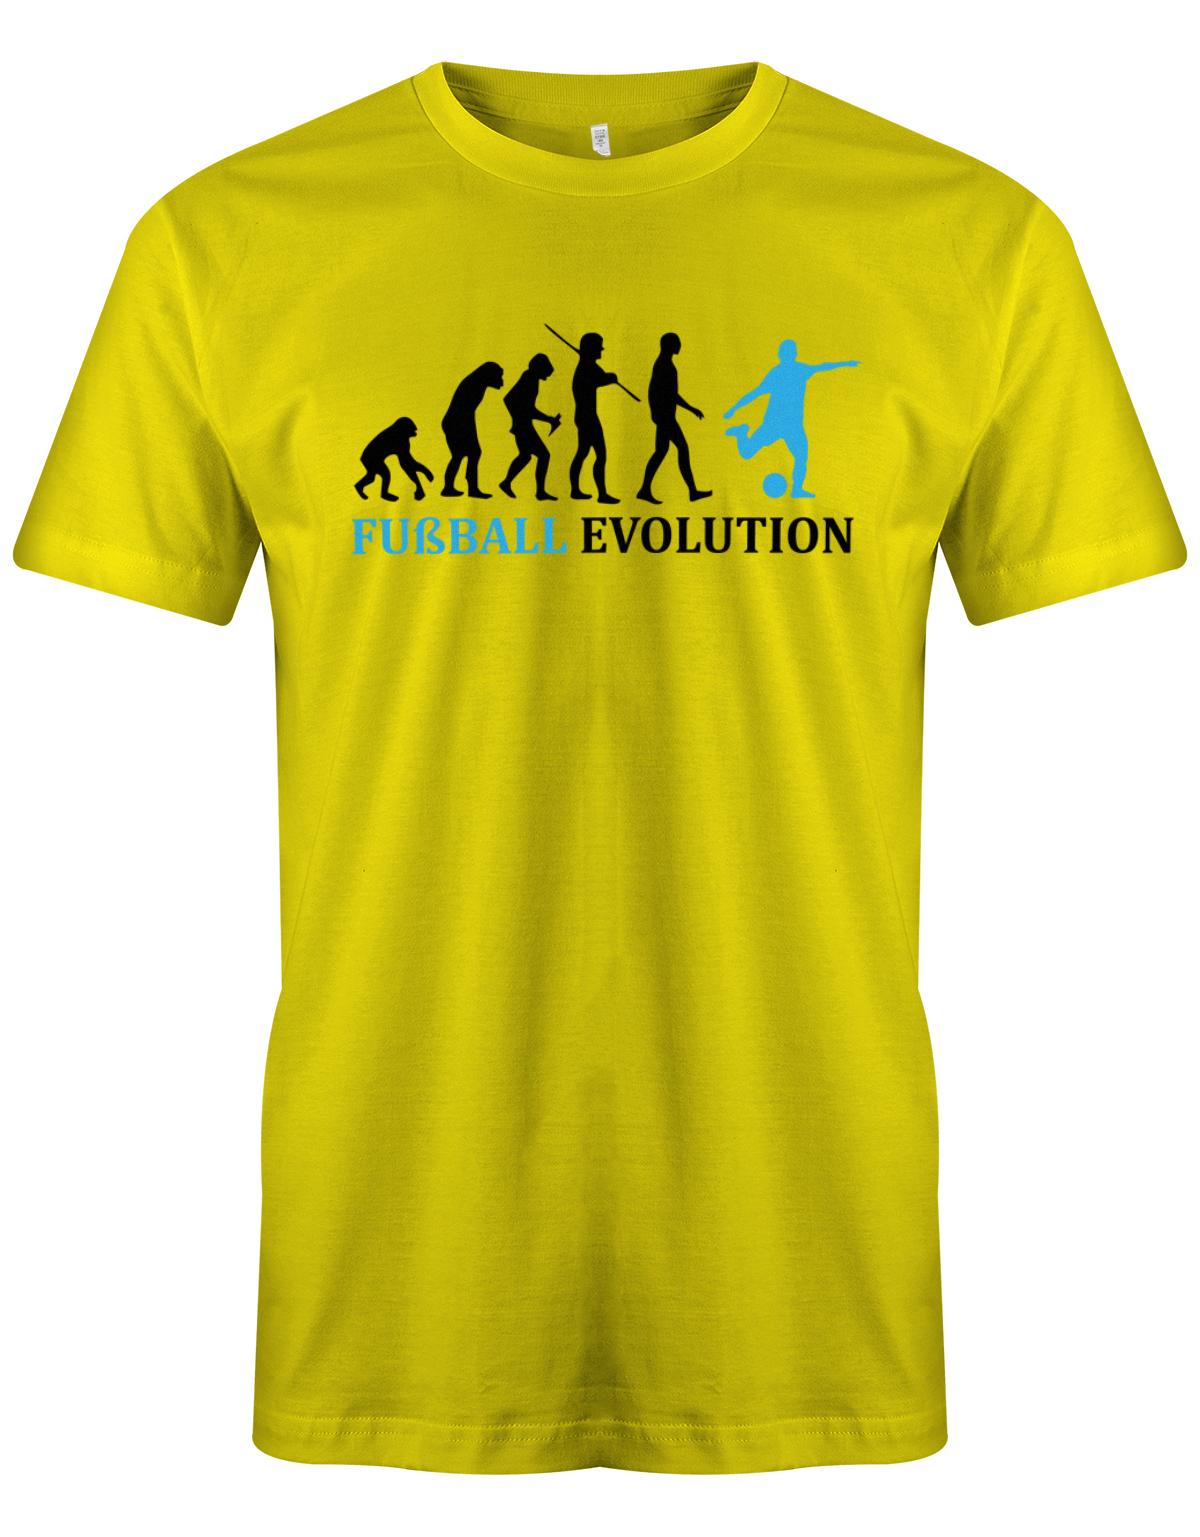 Fussball-Evolution-Herren-Shirt-Gelb-Hellblau